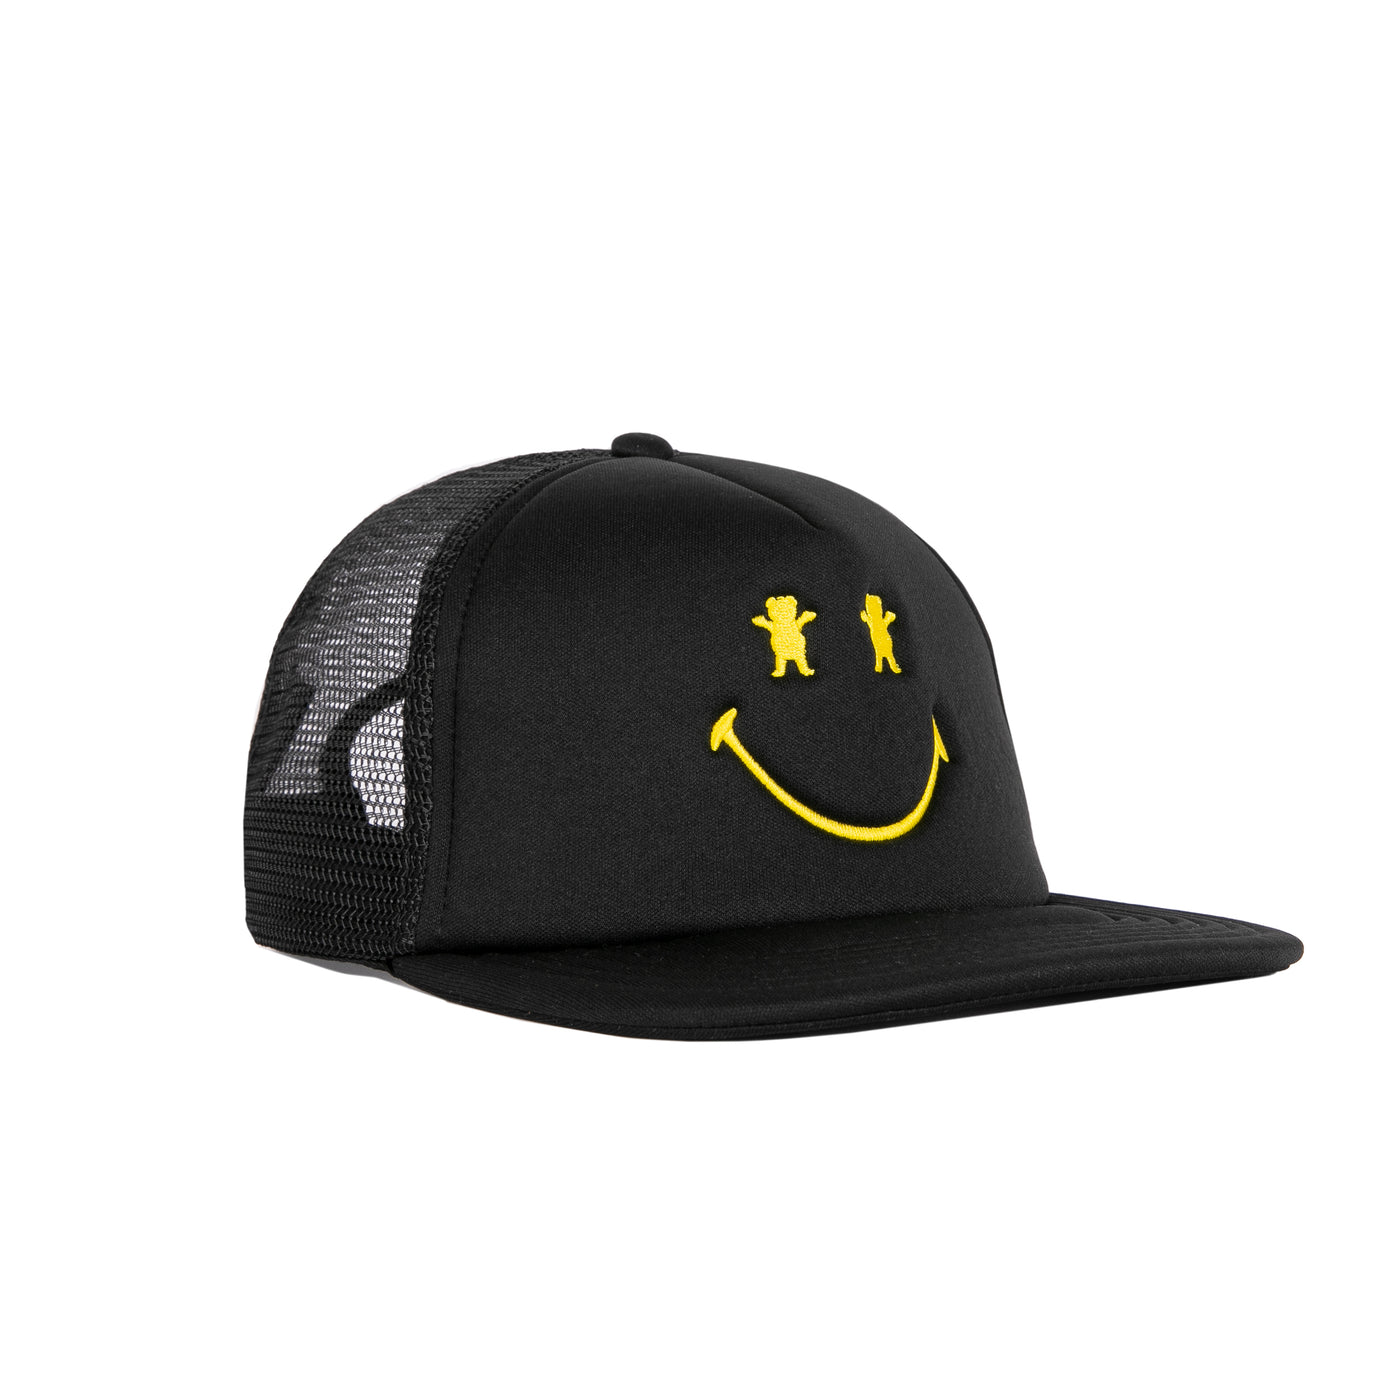 SMILEYWORLD Big Smile Trucker Snapback Hat - Black